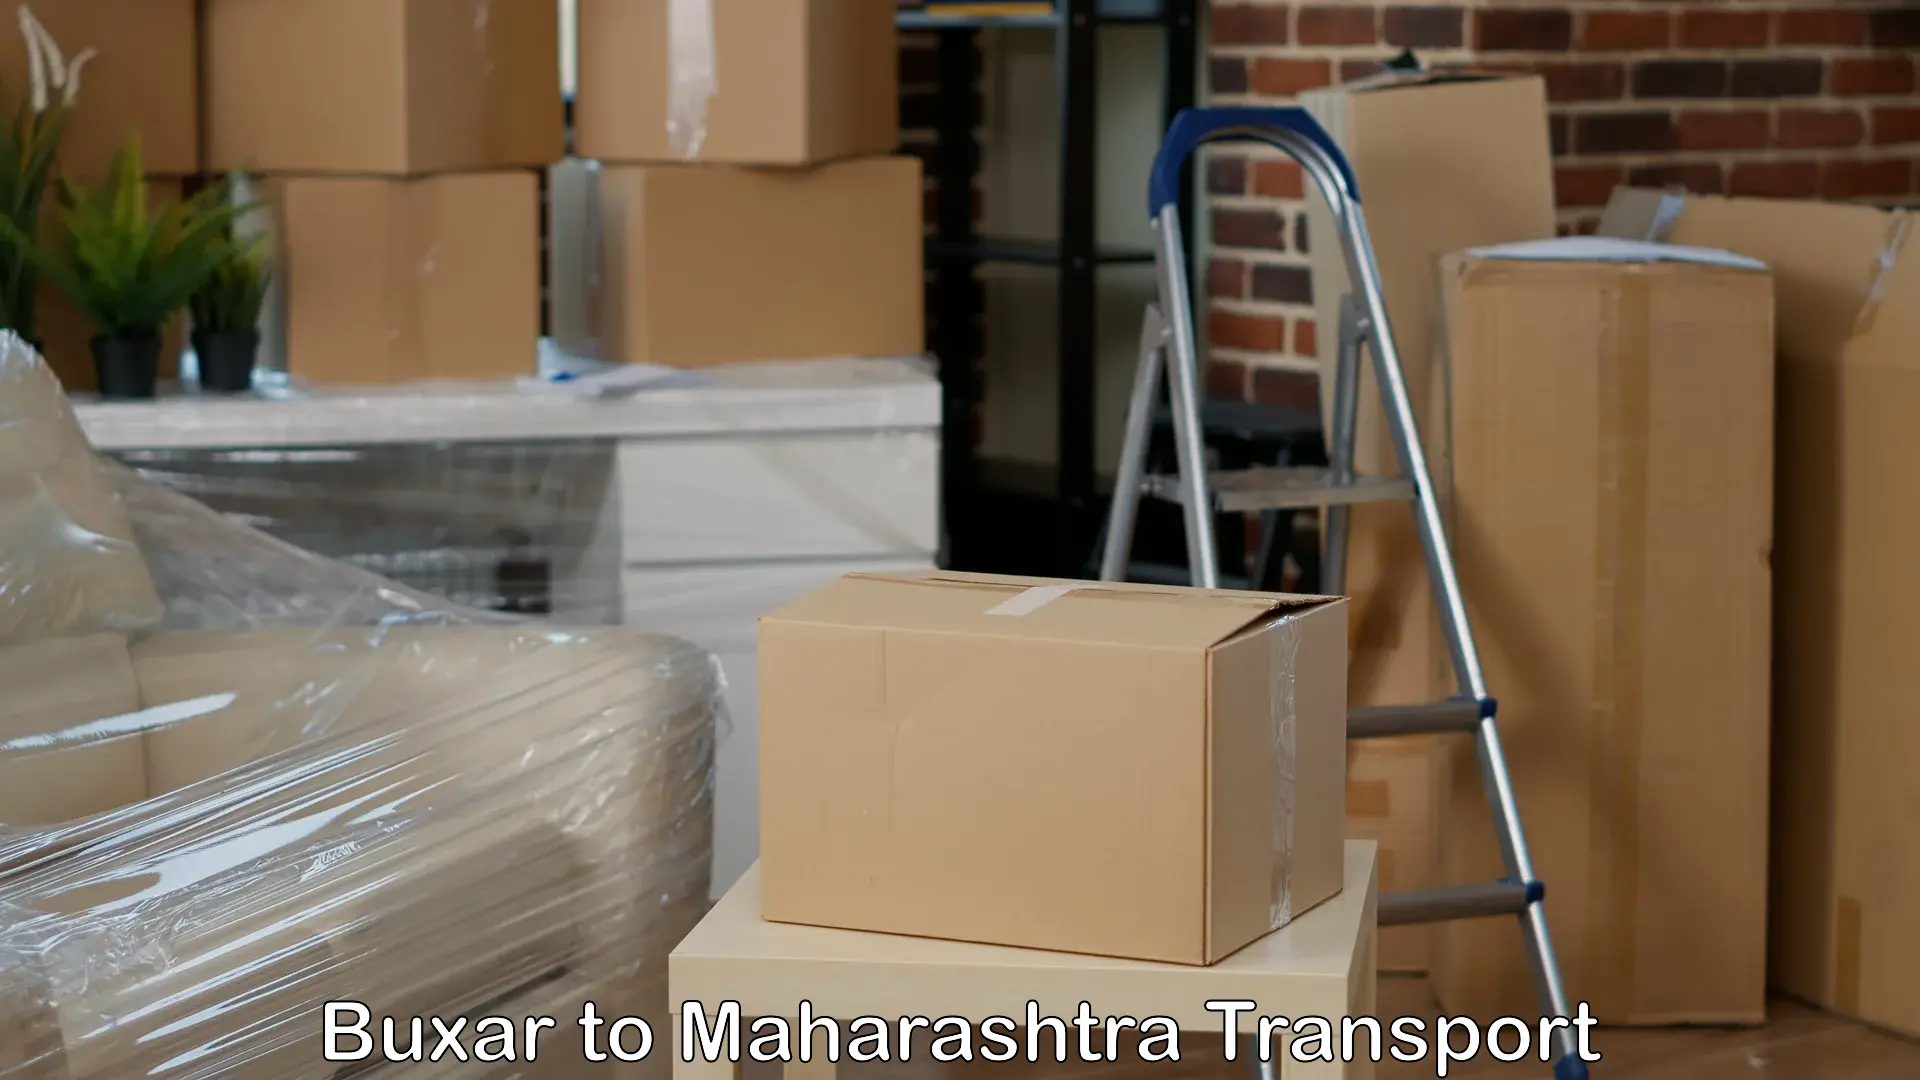 Lorry transport service Buxar to Ballarpur